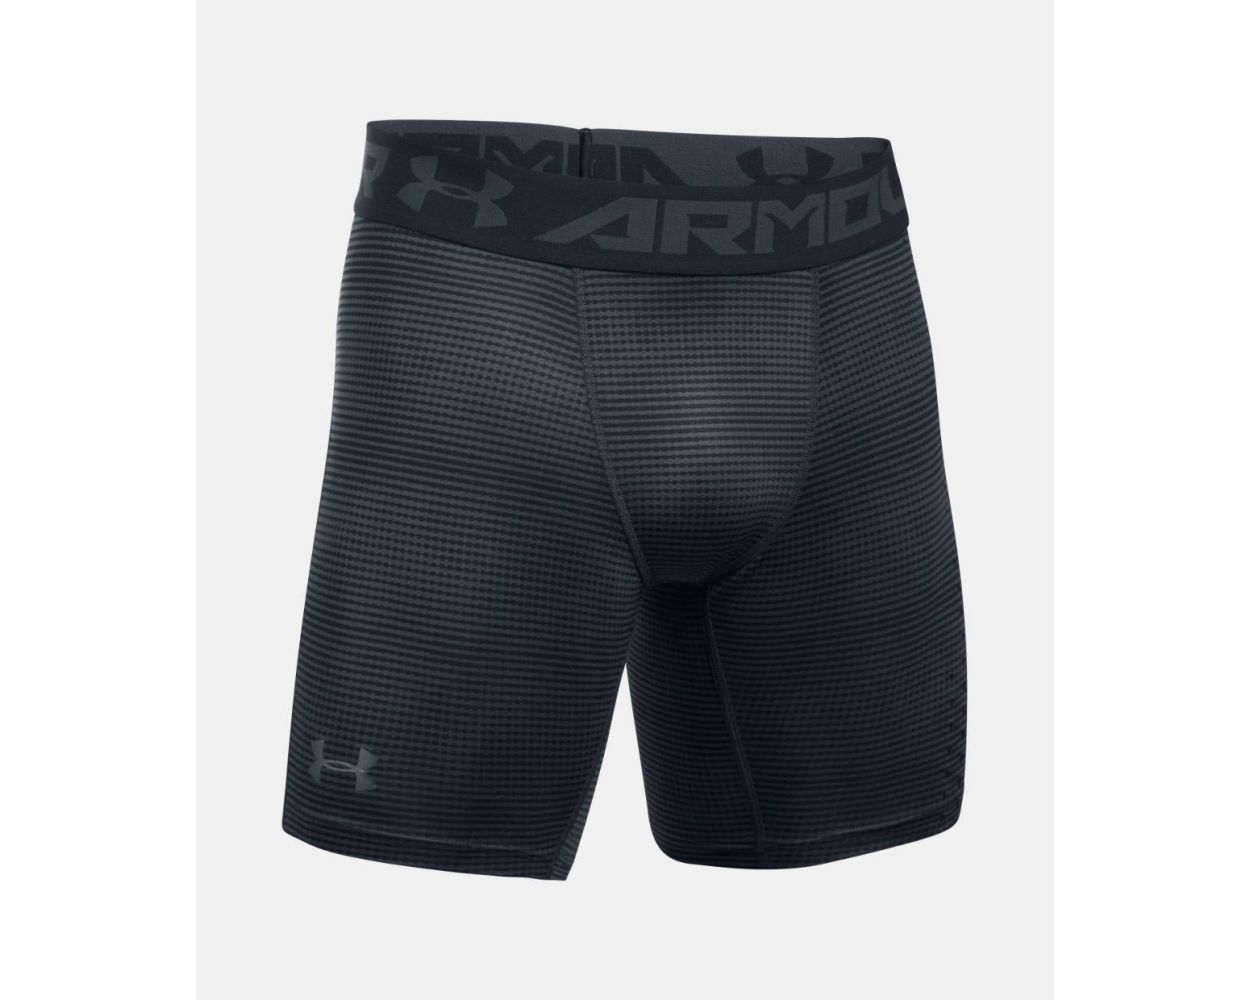  Under Armour Men's Armour HeatGear Compression Shorts